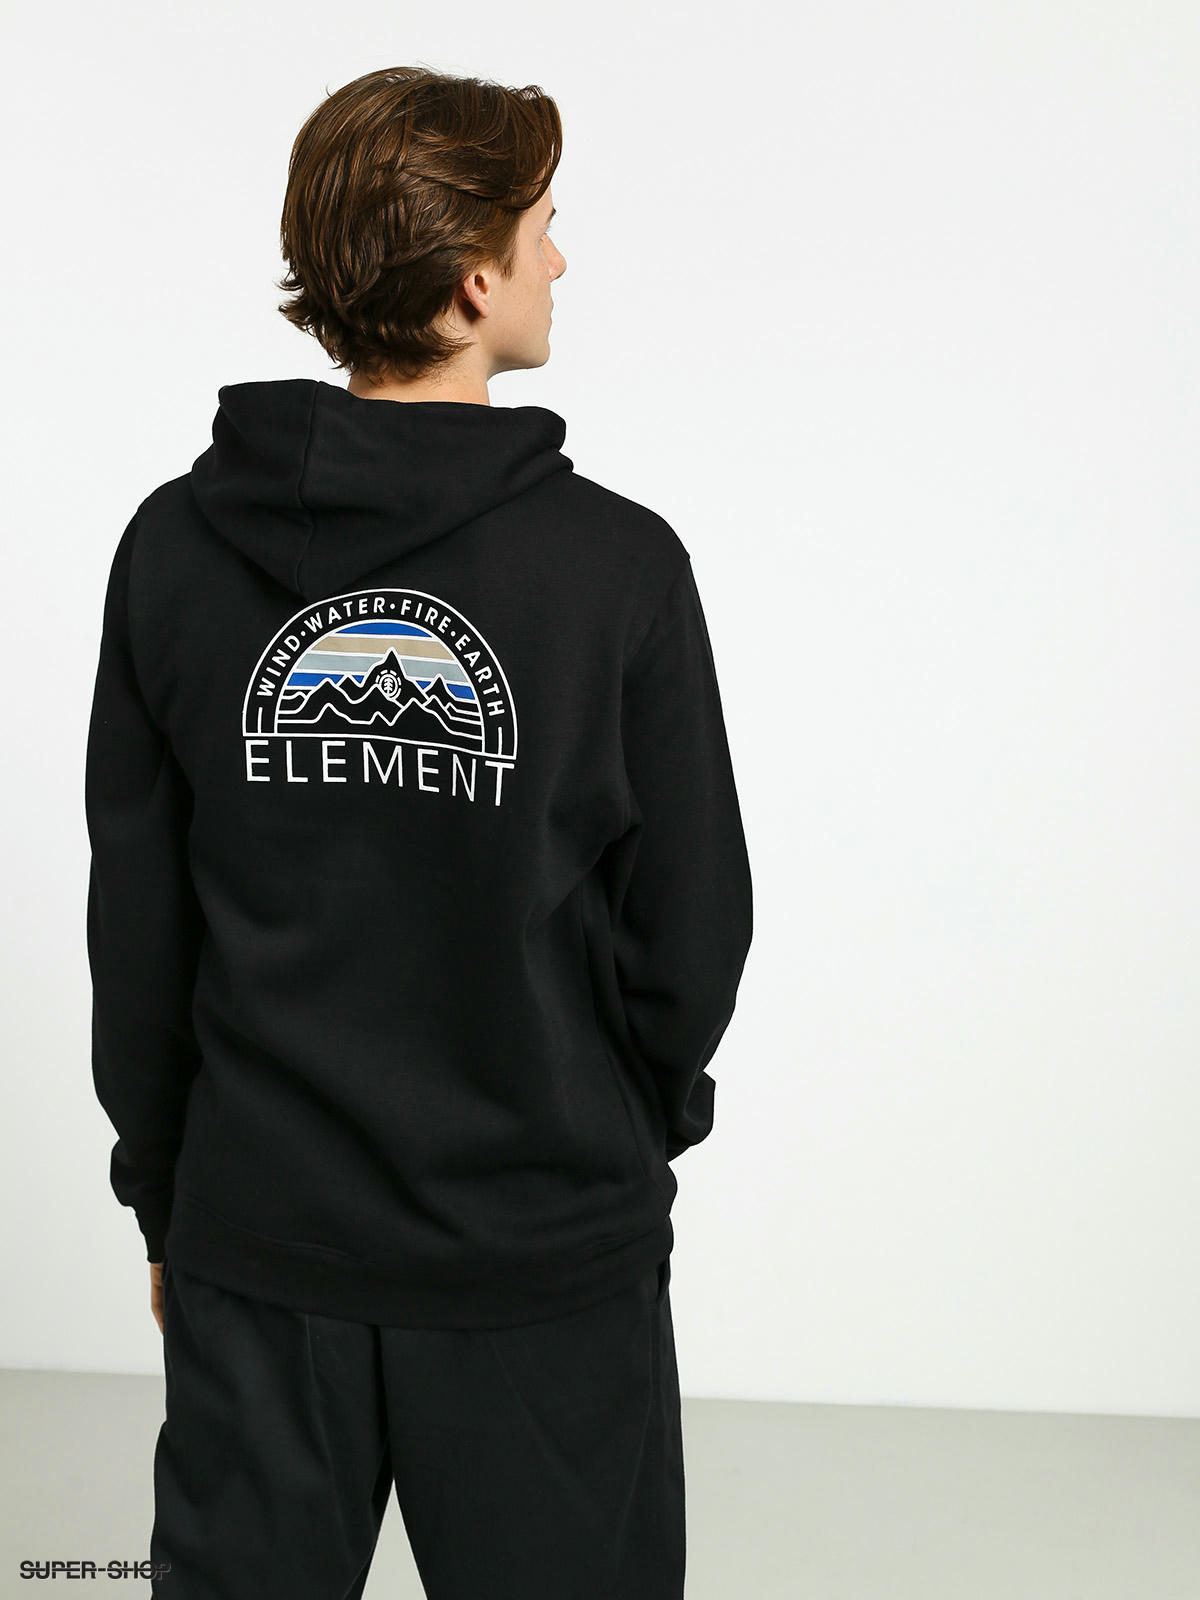 element sweatshirt